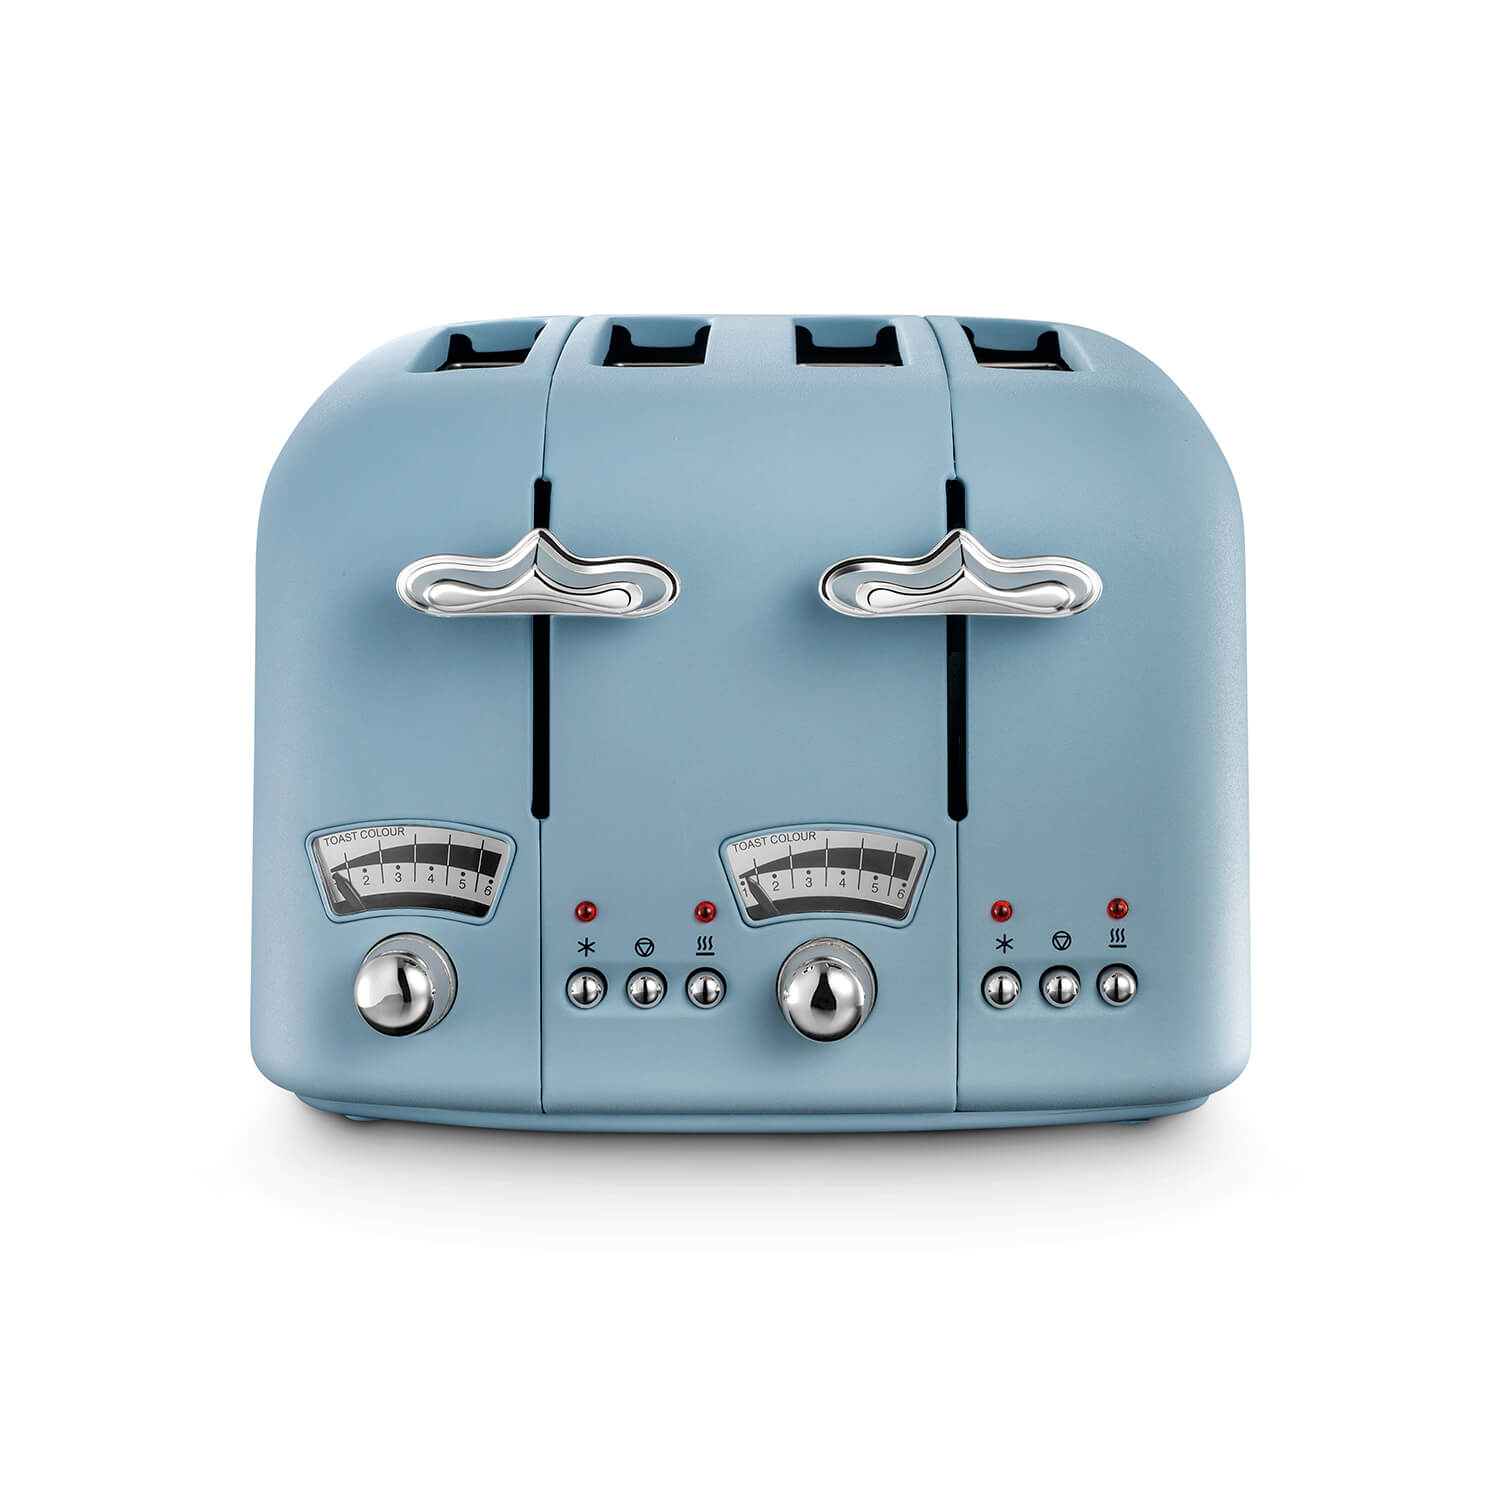 Delonghi 4-Slice Toaster - Blue | CT04AZ 1 Shaws Department Stores